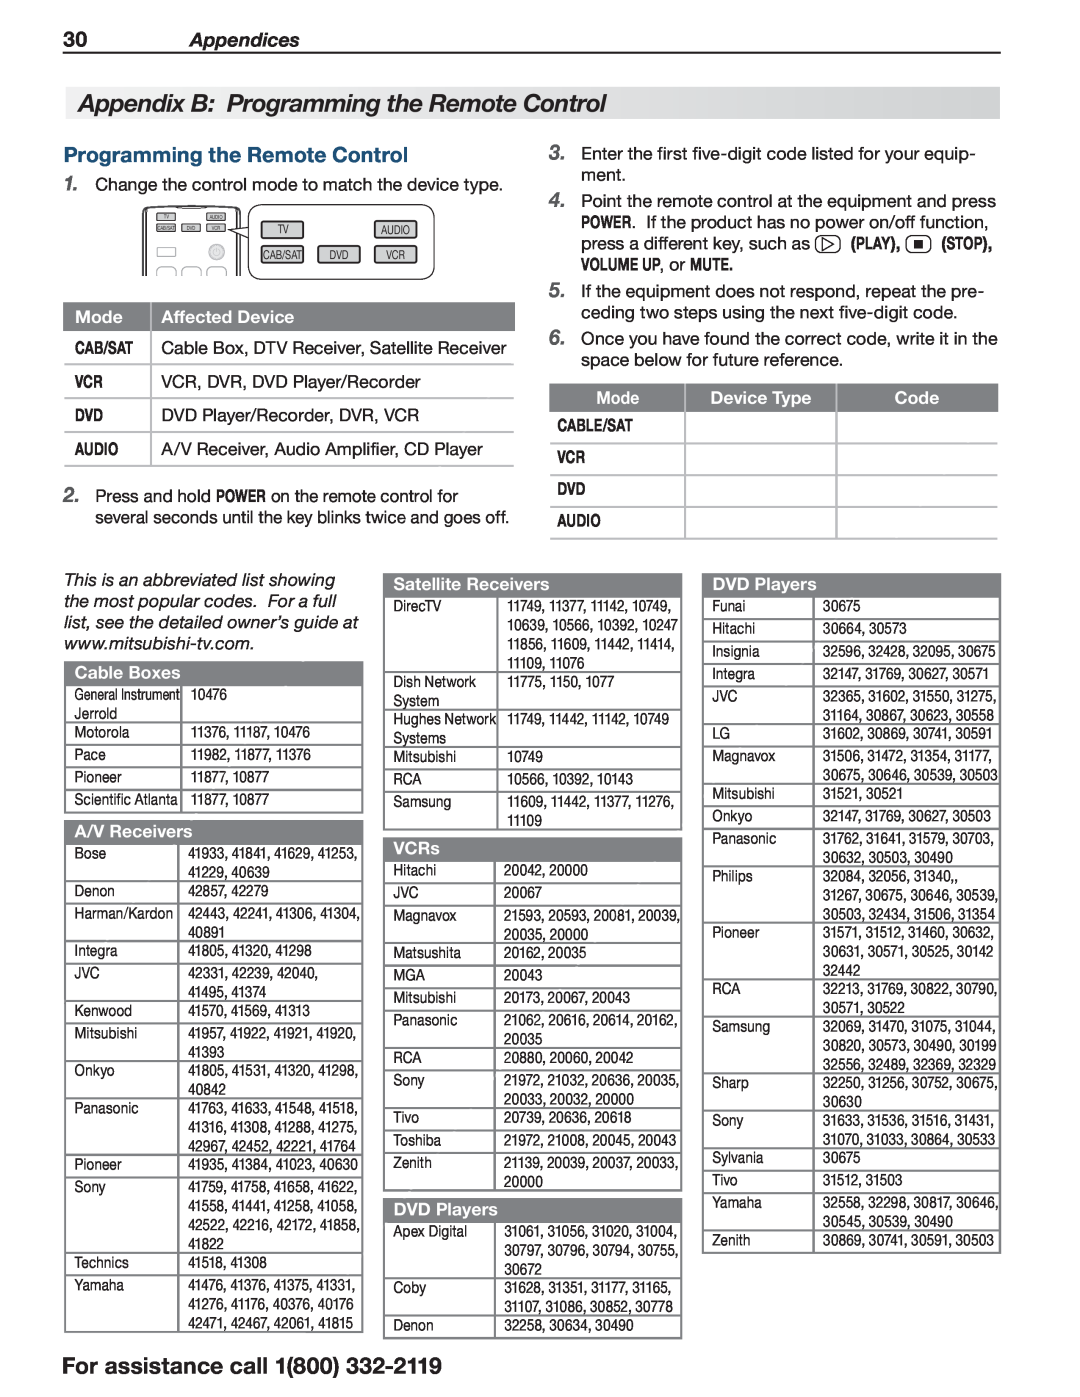 Mitsubishi Electronics 838 manual Appendix B Programming the Remote Control, 30Appendices, For assistance call 